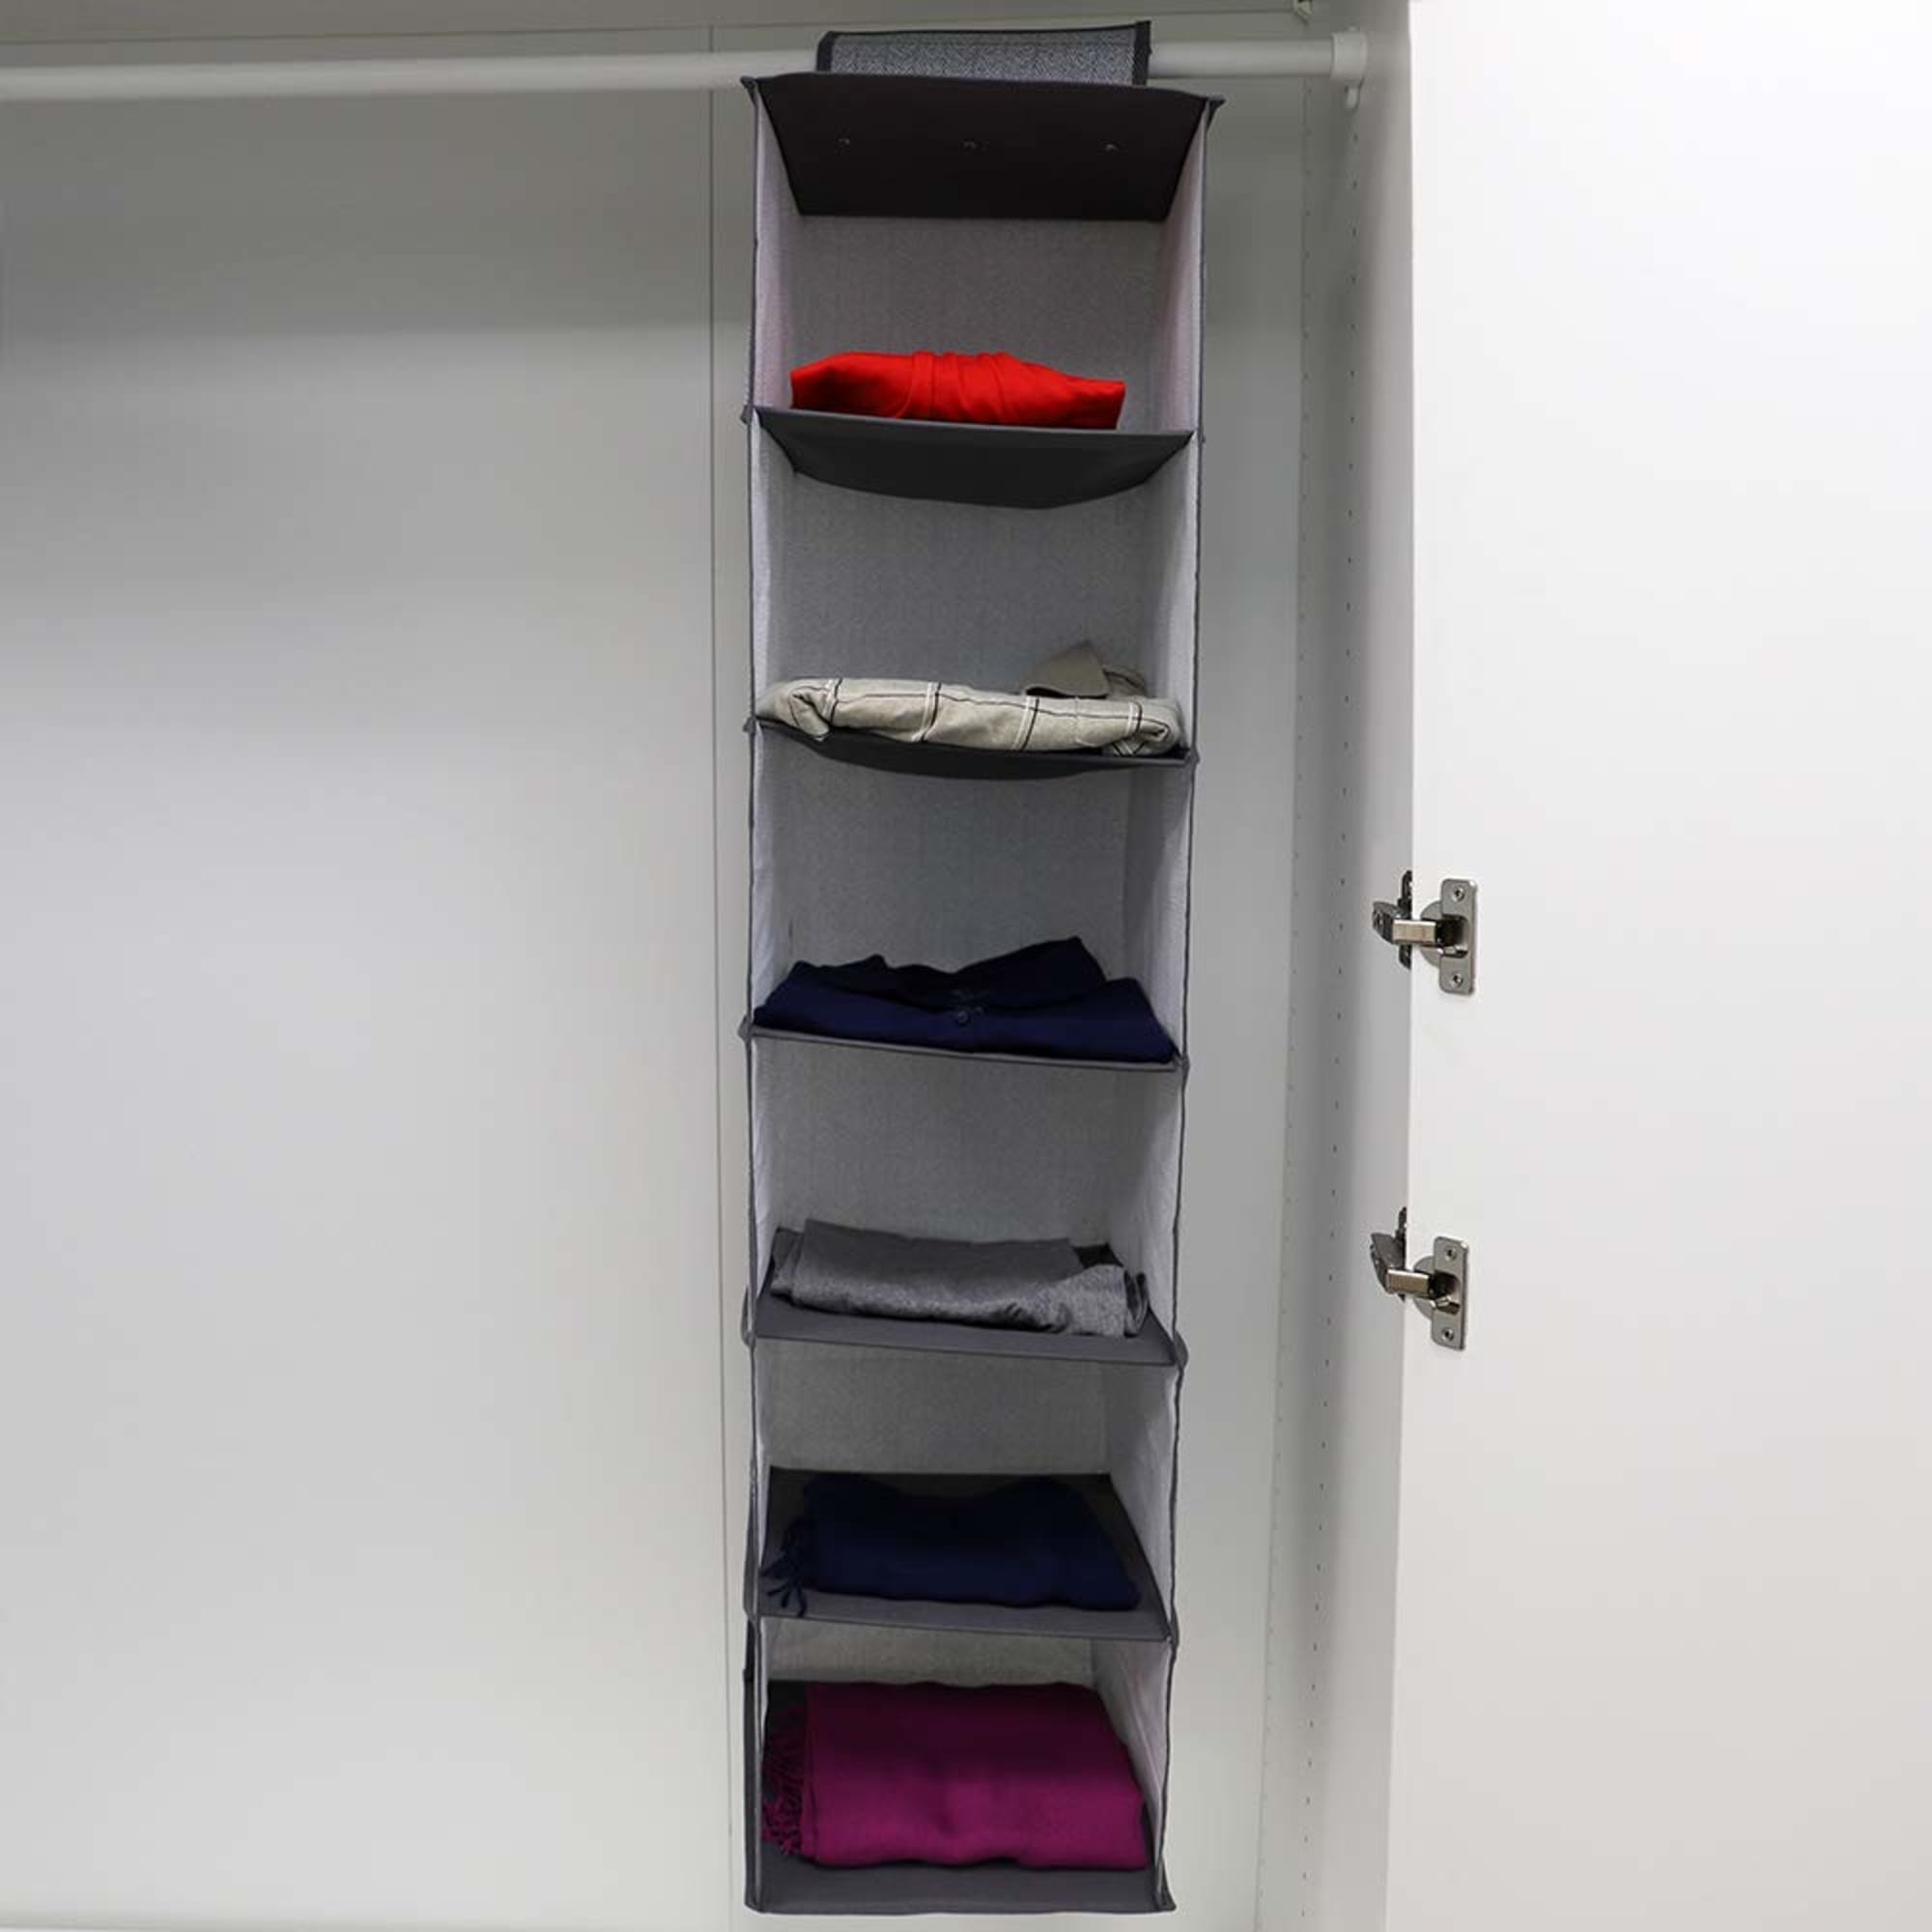 Home Basics Herringbone 6 Shelf Non-woven Hanging Closet Organizer, Grey $5.00 EACH, CASE PACK OF 12